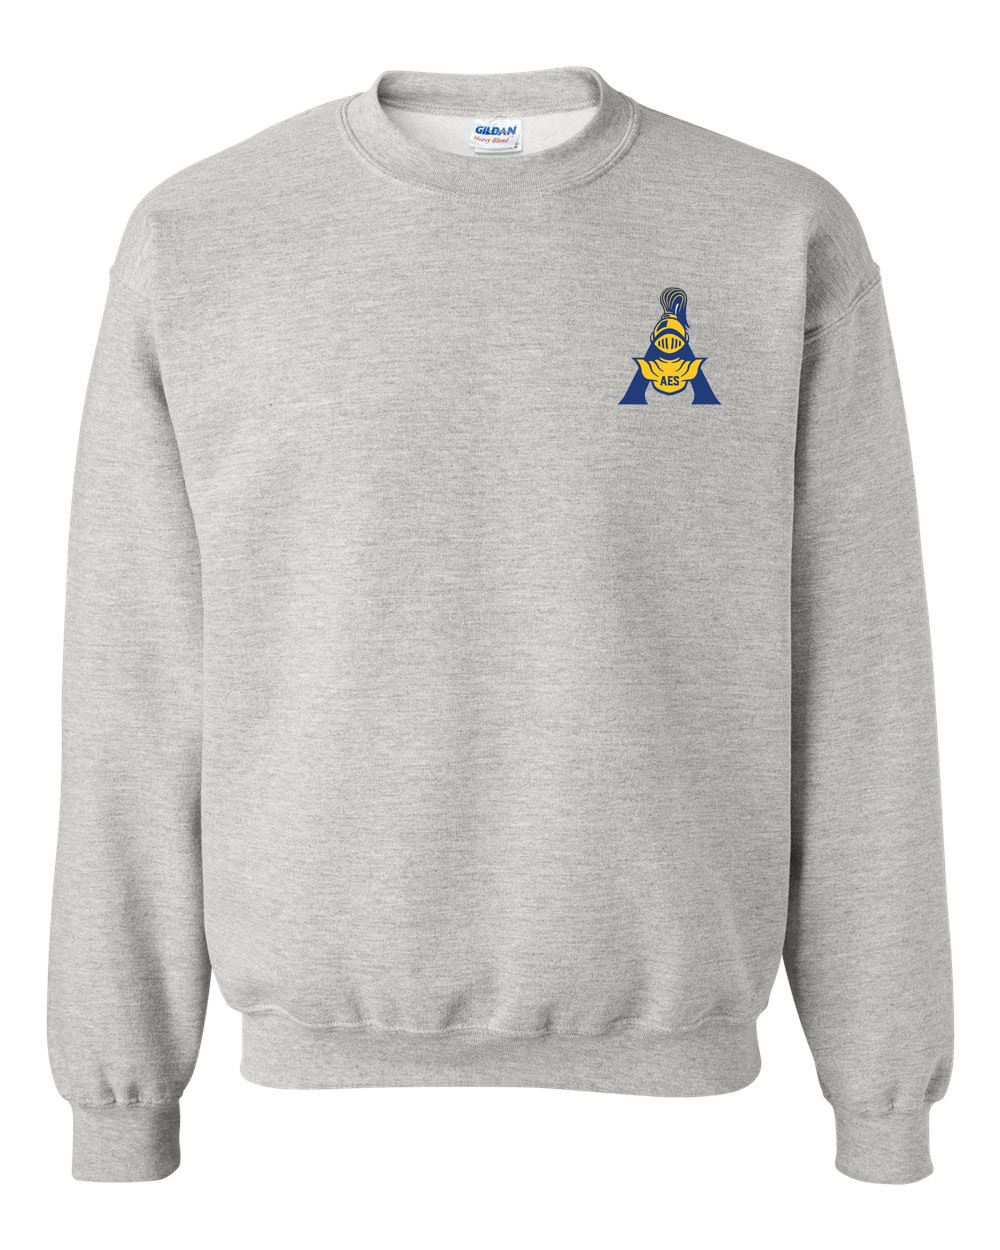 ANN Spirit Sweatshirt w/ AES Logo - Please Allow 2-3 Weeks for Delivery